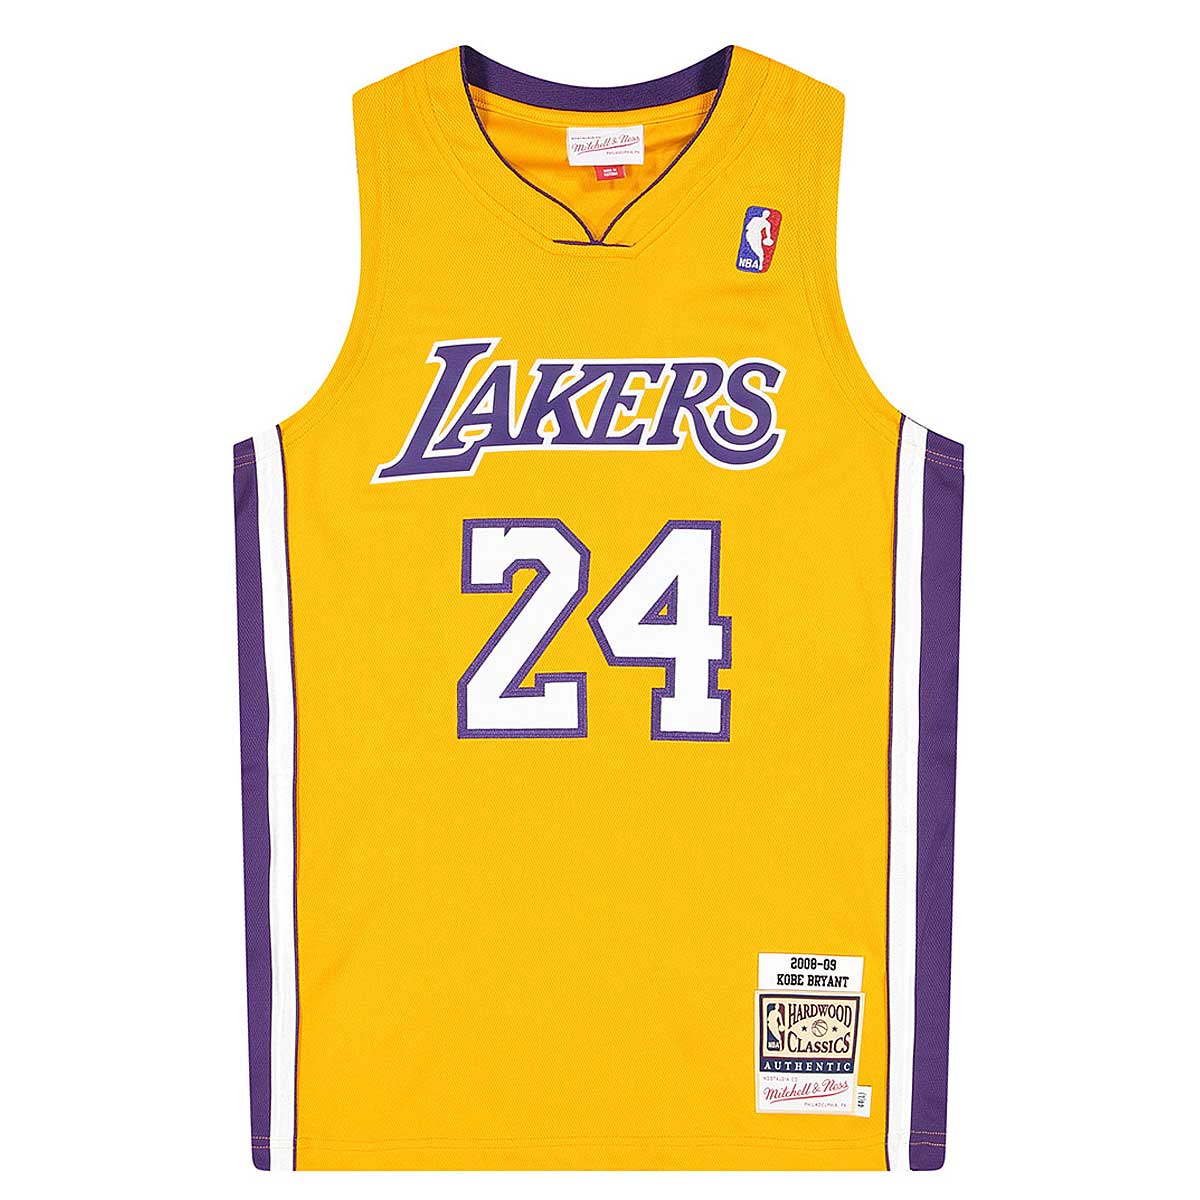 kleuring wasserette Vervagen Buy NBA LOS ANGELES LAKERS 2008-09 AUTHENTIC JERSEY KOBE BRYANT for EUR  274.95 on KICKZ.com!